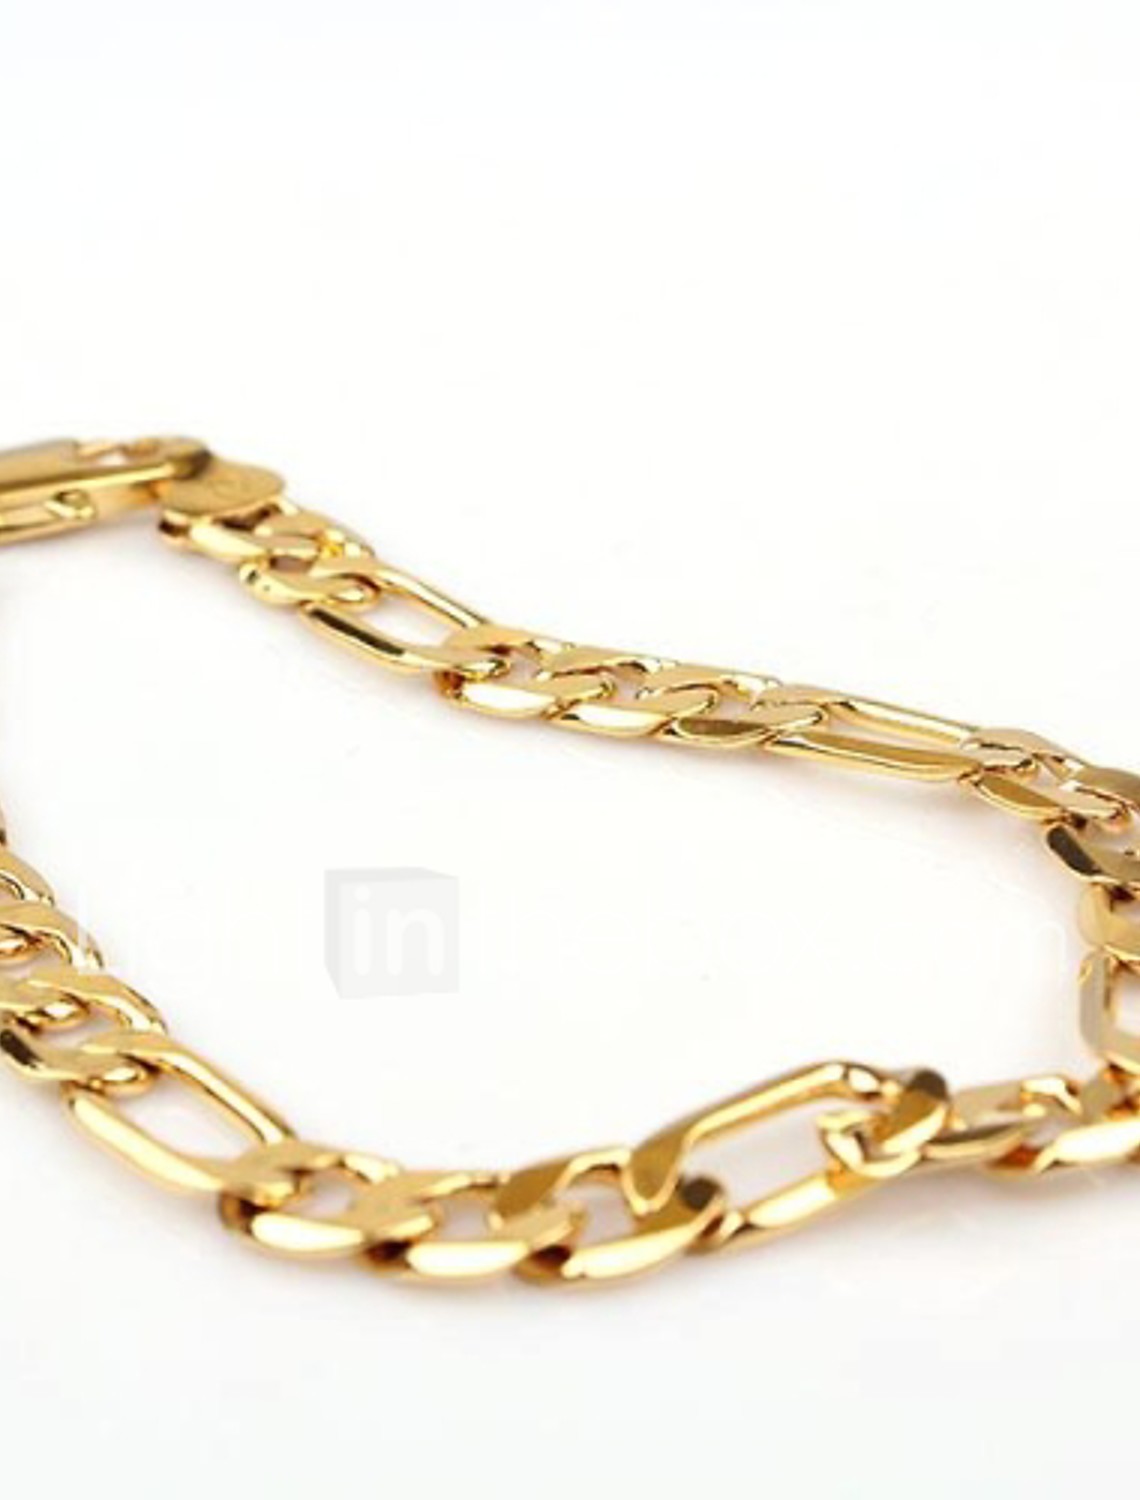 SALE 3 Pcs Link Chain Bracelets Set 18K Gold Filled Titanium Steel Herringbone Bracelet  Paper Clip Chain Bracelet  Ball Chain Bracelet